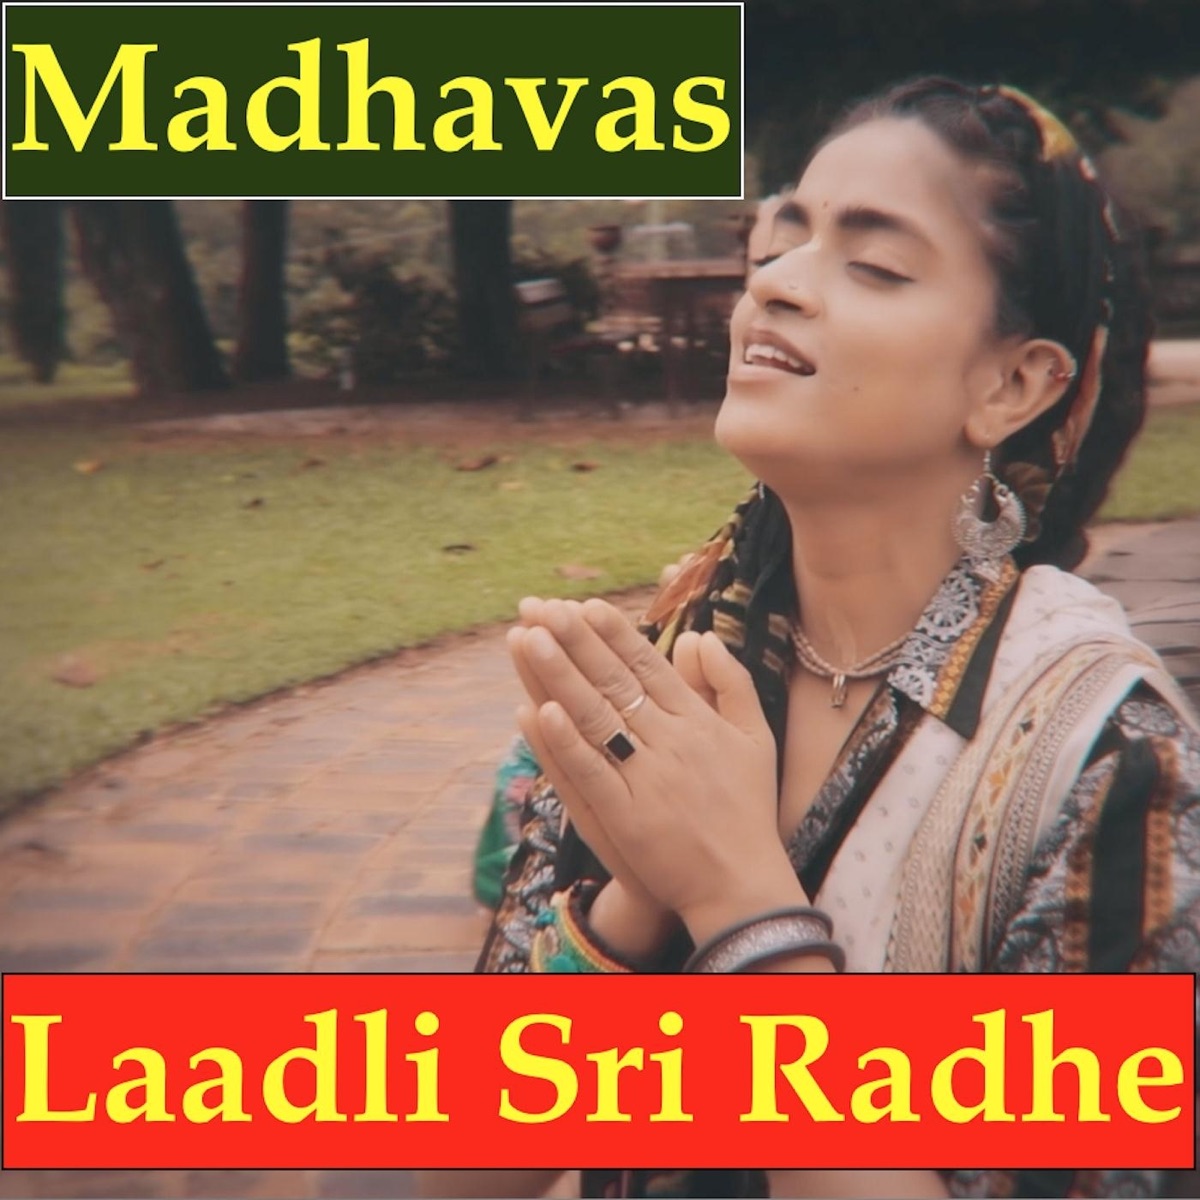 Hare Krishna Mantra - Album by Madhavas - Apple Music